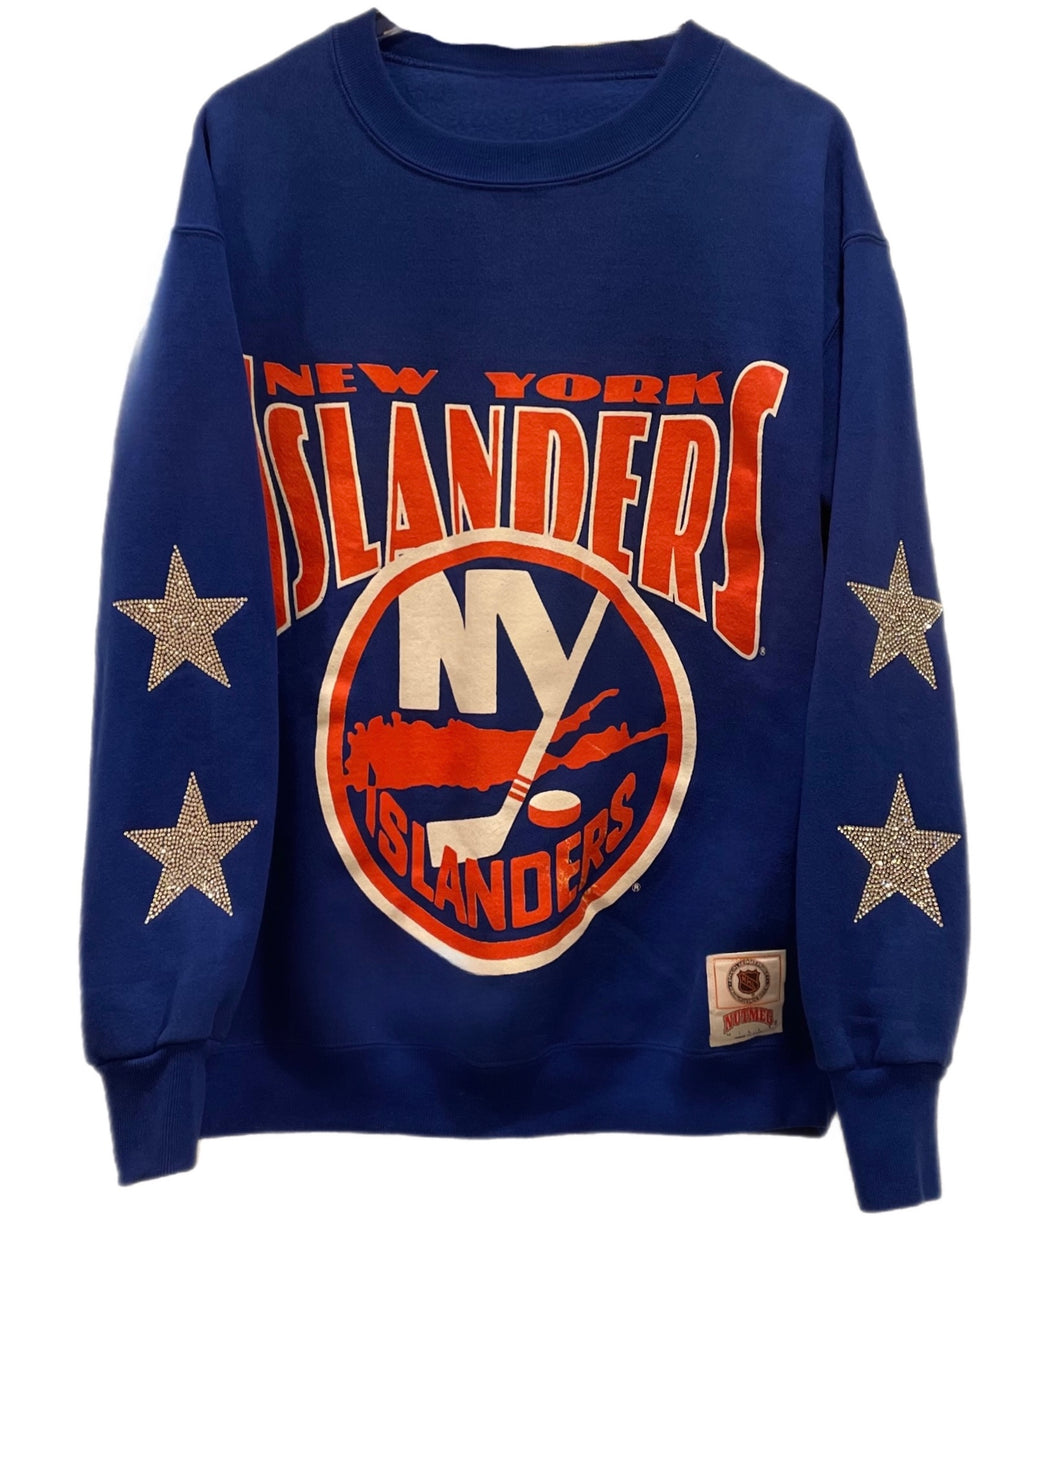 NY Islanders, NHL One of a KIND Vintage ”Rare Find” Sweatshirt with Crystal Star Design